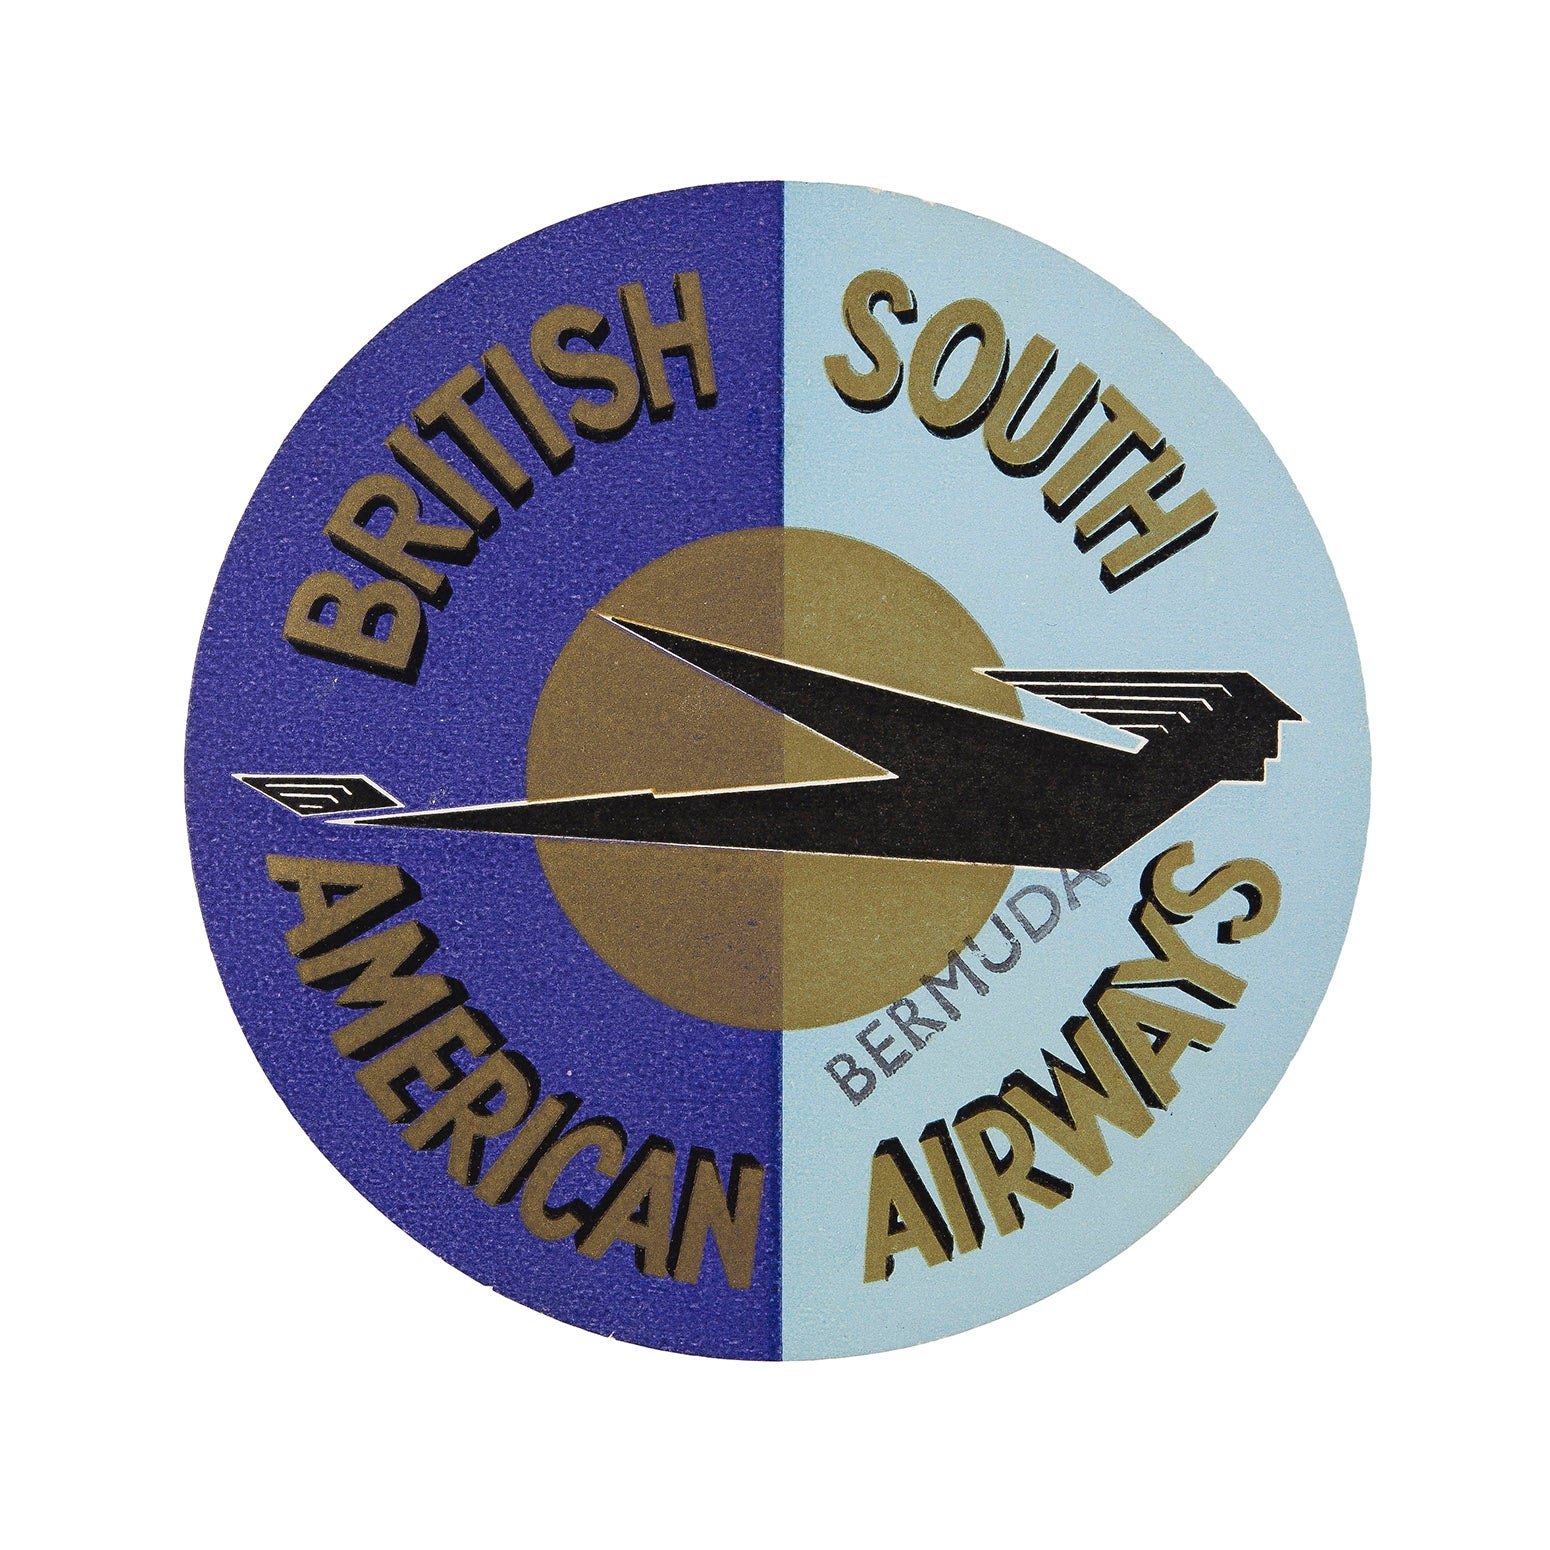 British South American Airways (Luggage Label)